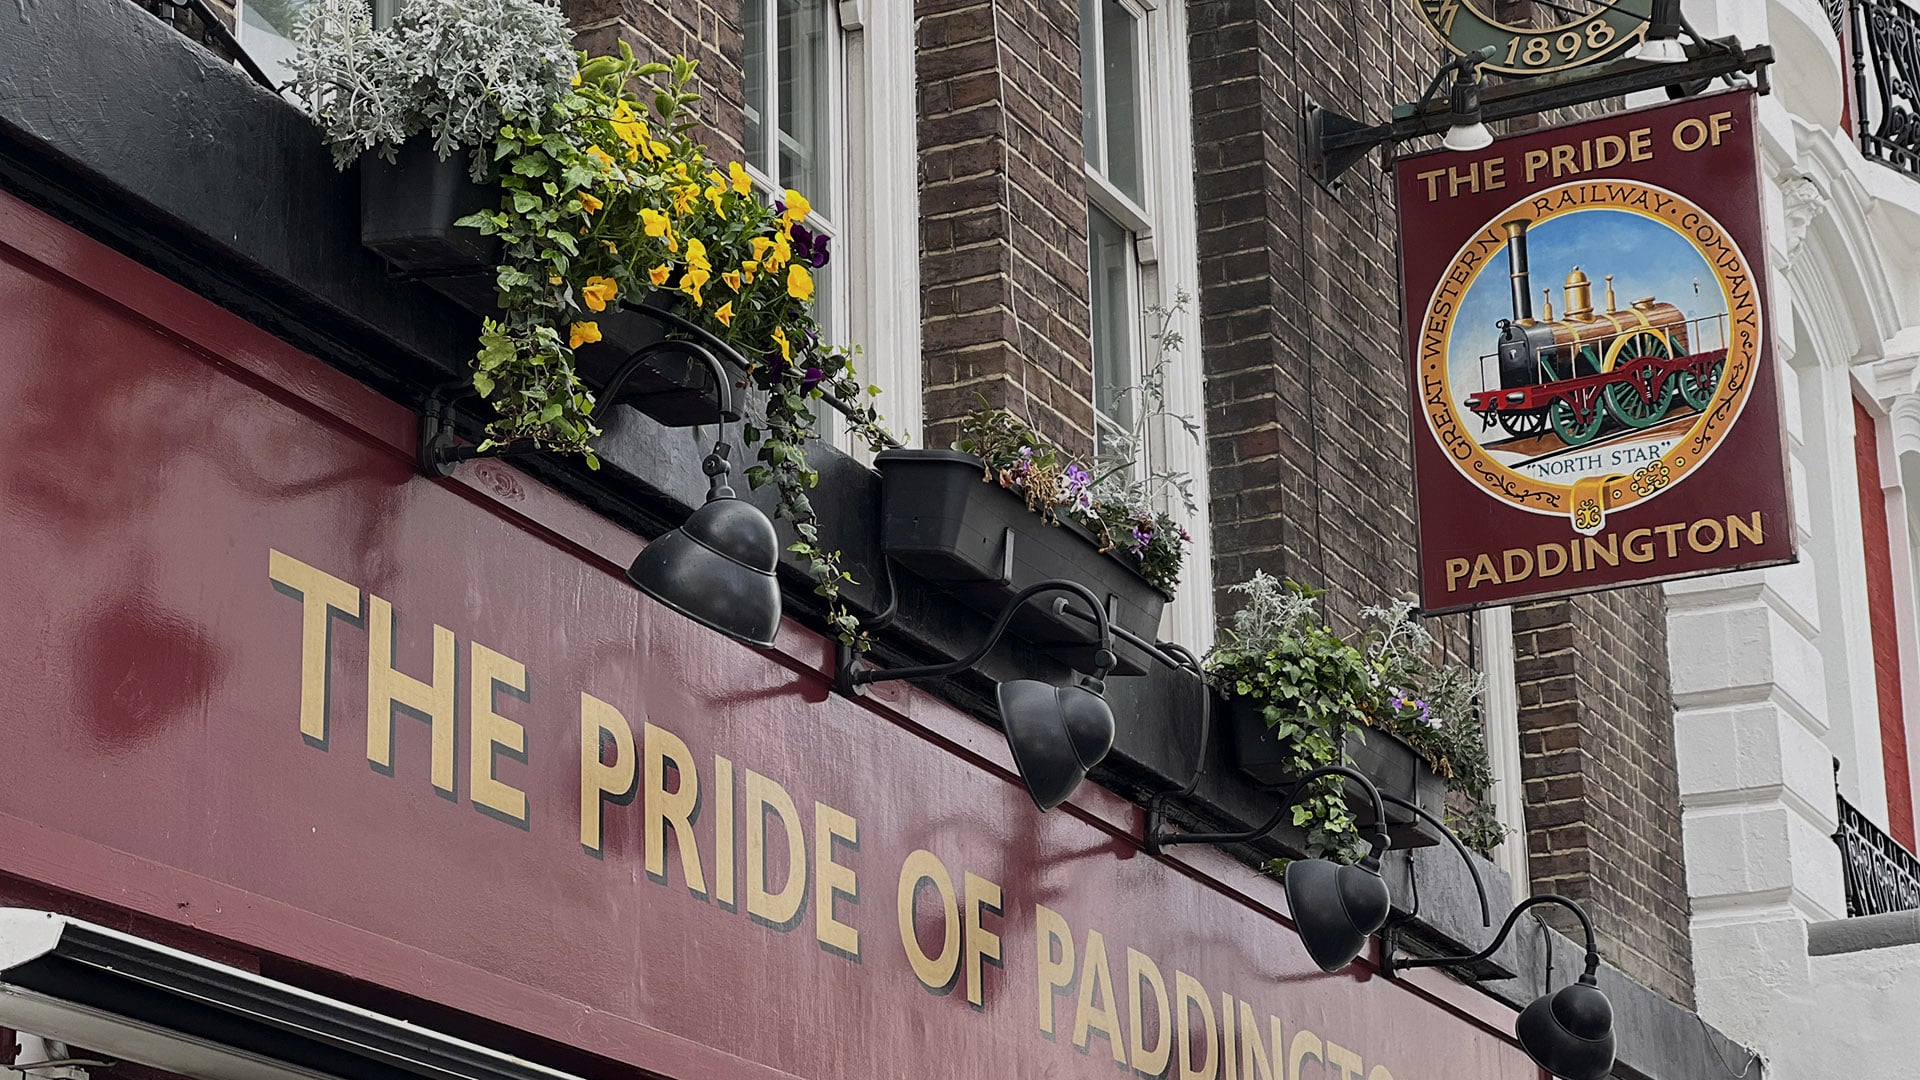 the-pride-of-paddington-pub-paddington-london